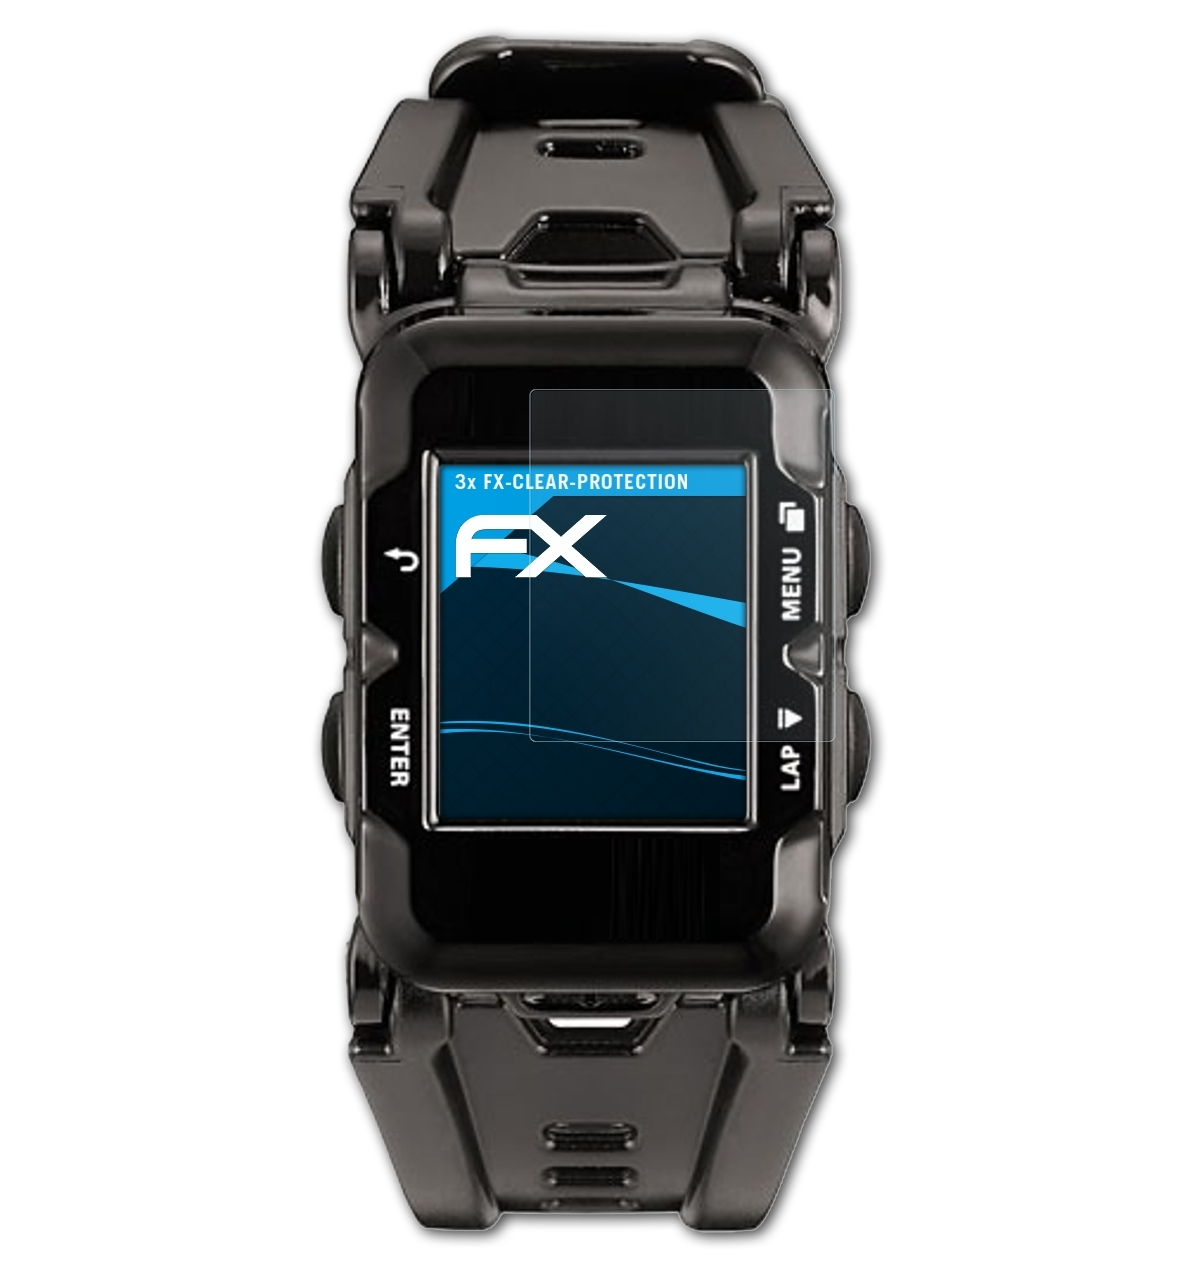 GPS ATFOLIX 3x FX-Clear C Watch) Lezyne Micro Displayschutz(für